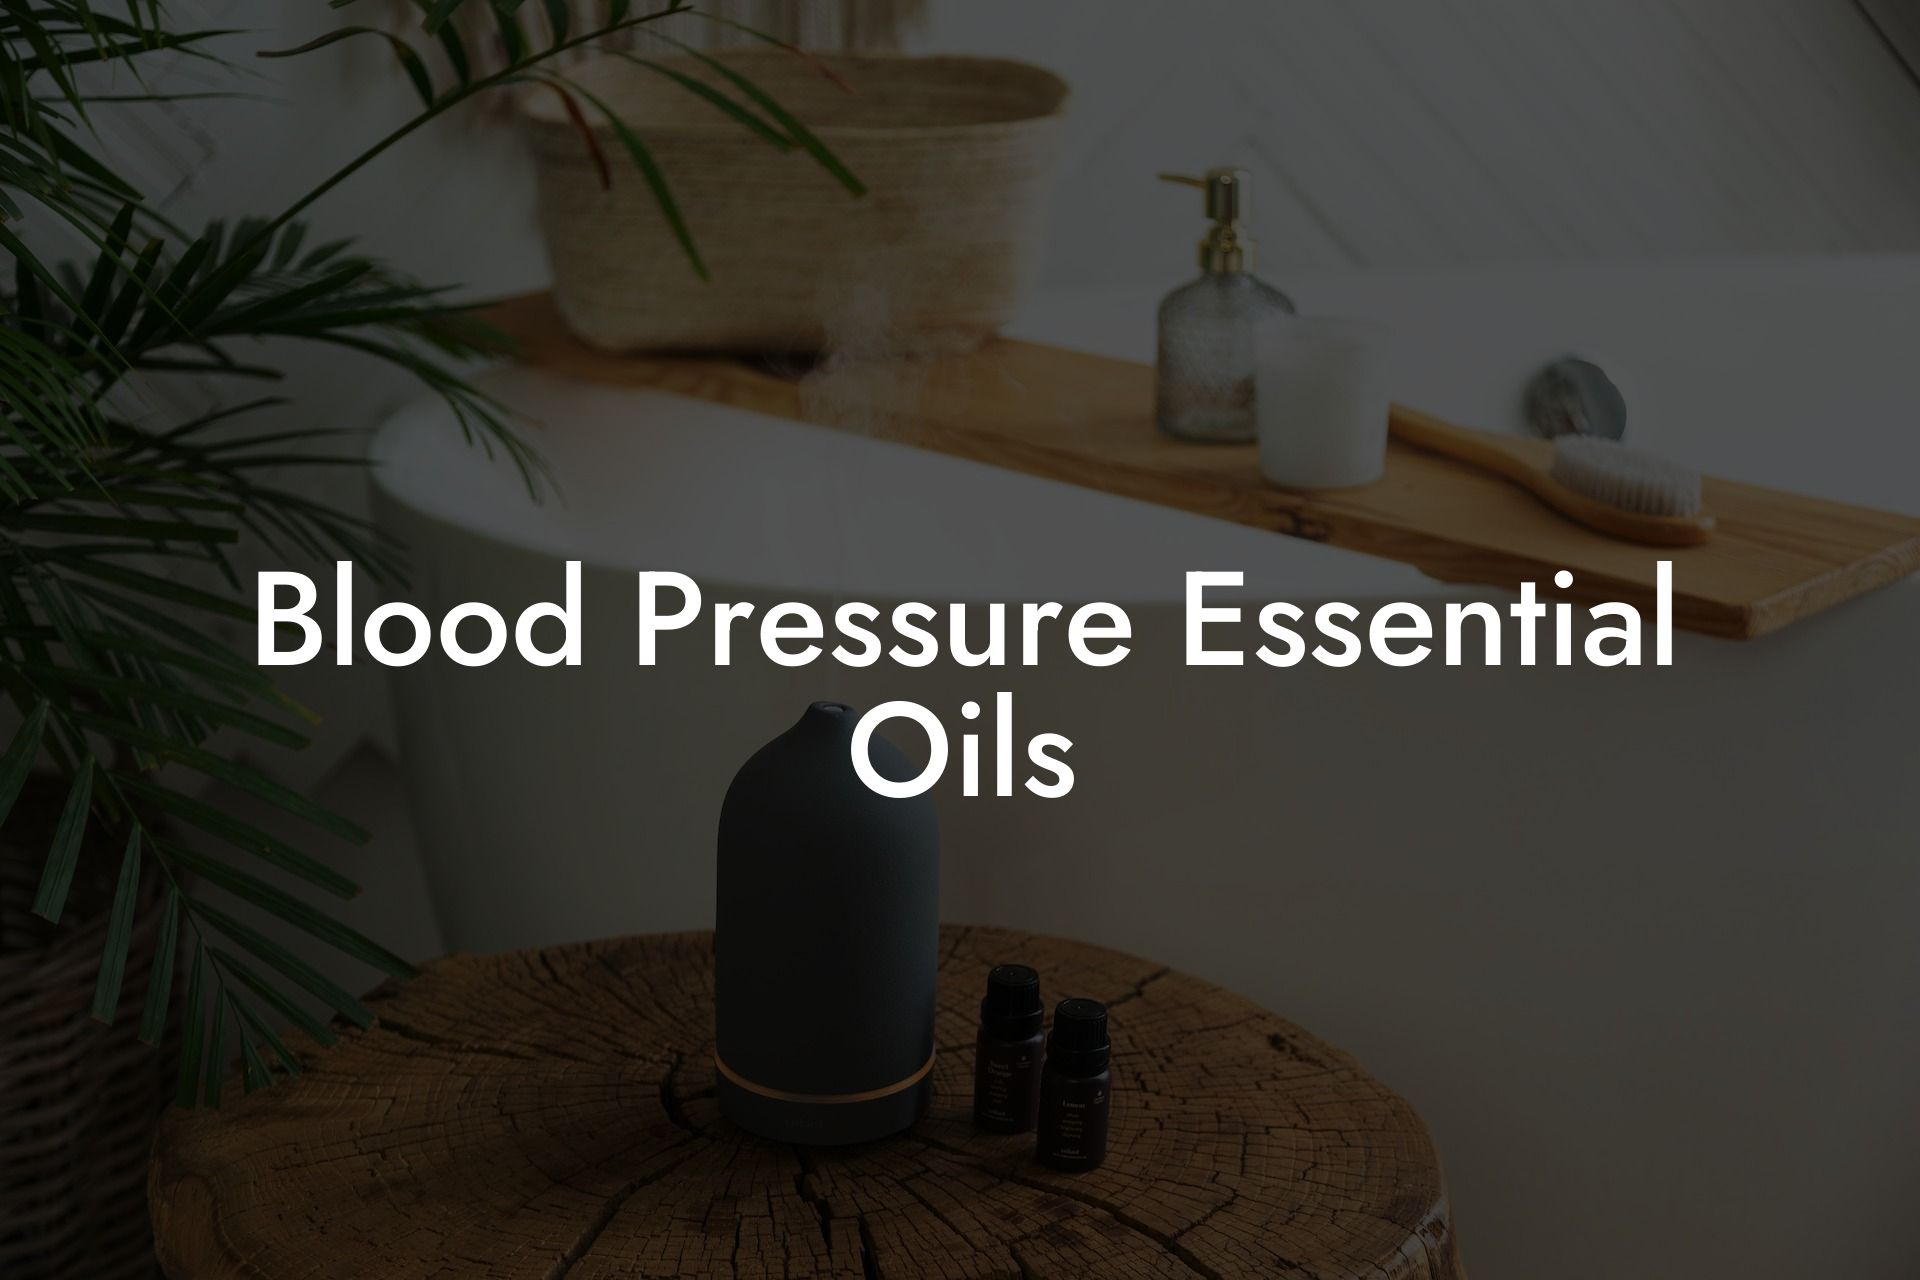 Blood Pressure Essential Oils